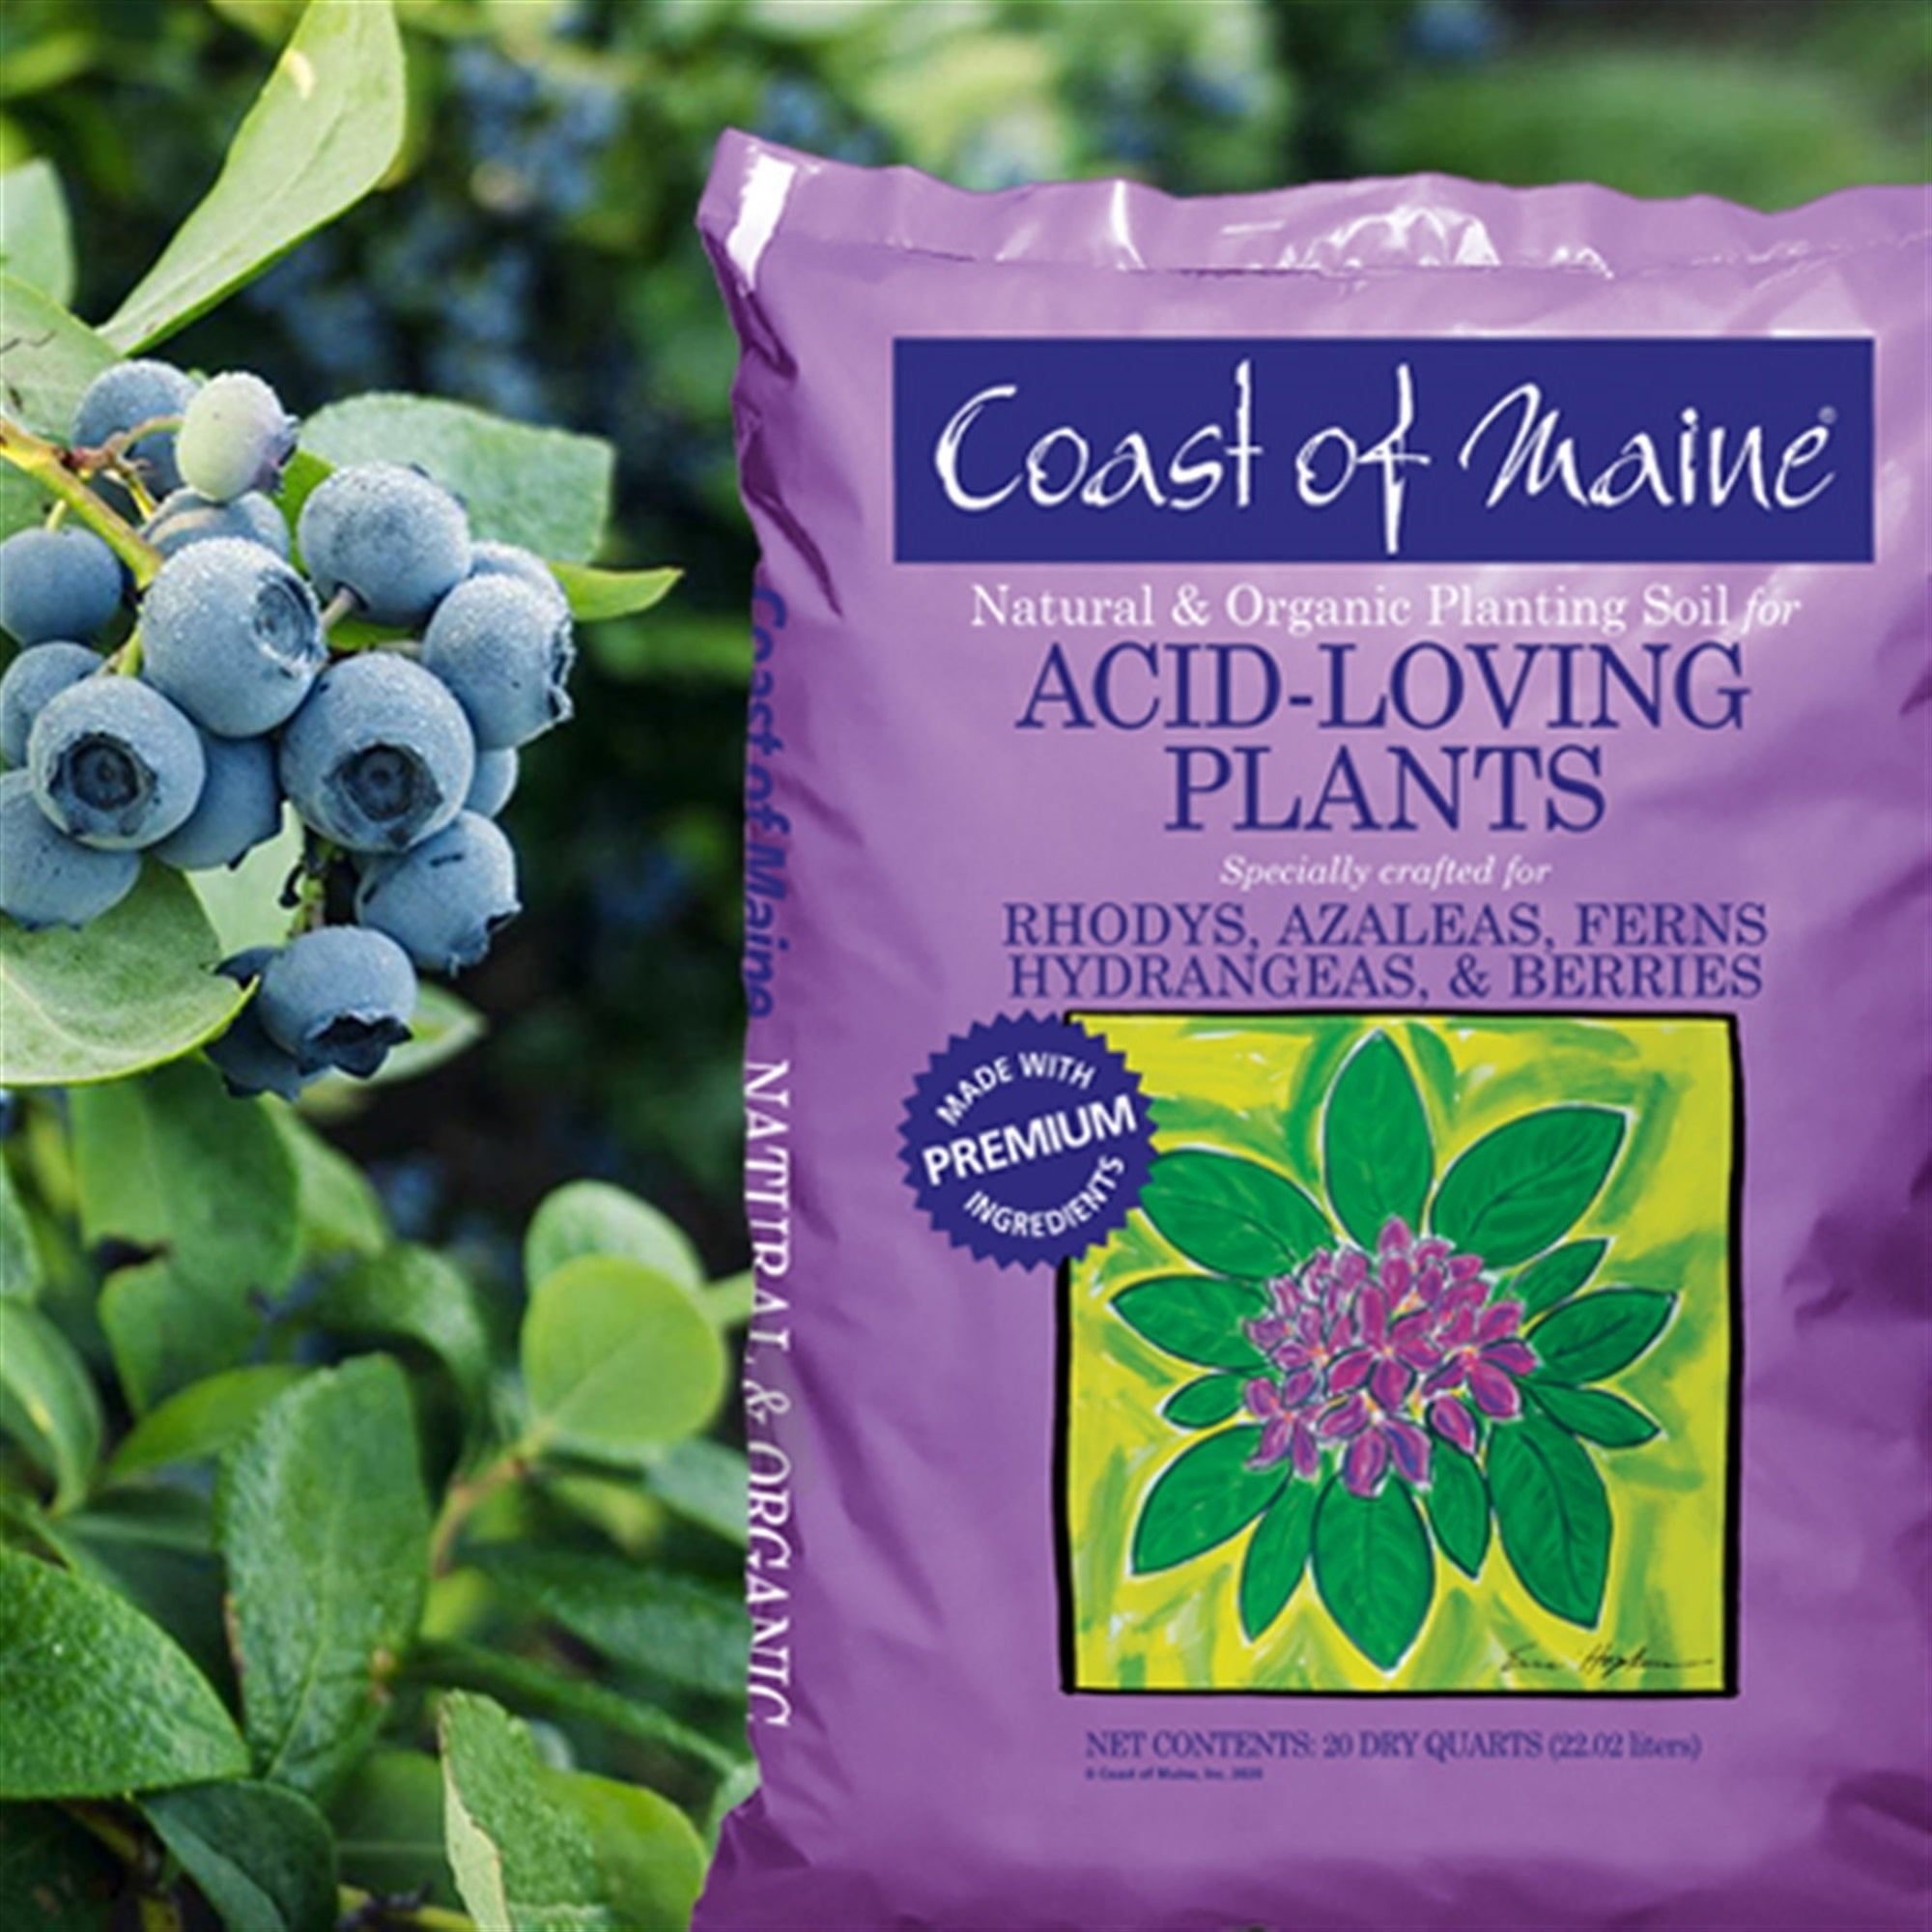 Coast of Maine Organic & Natural Planting Soil for Acid-Loving Plants, 20 QT